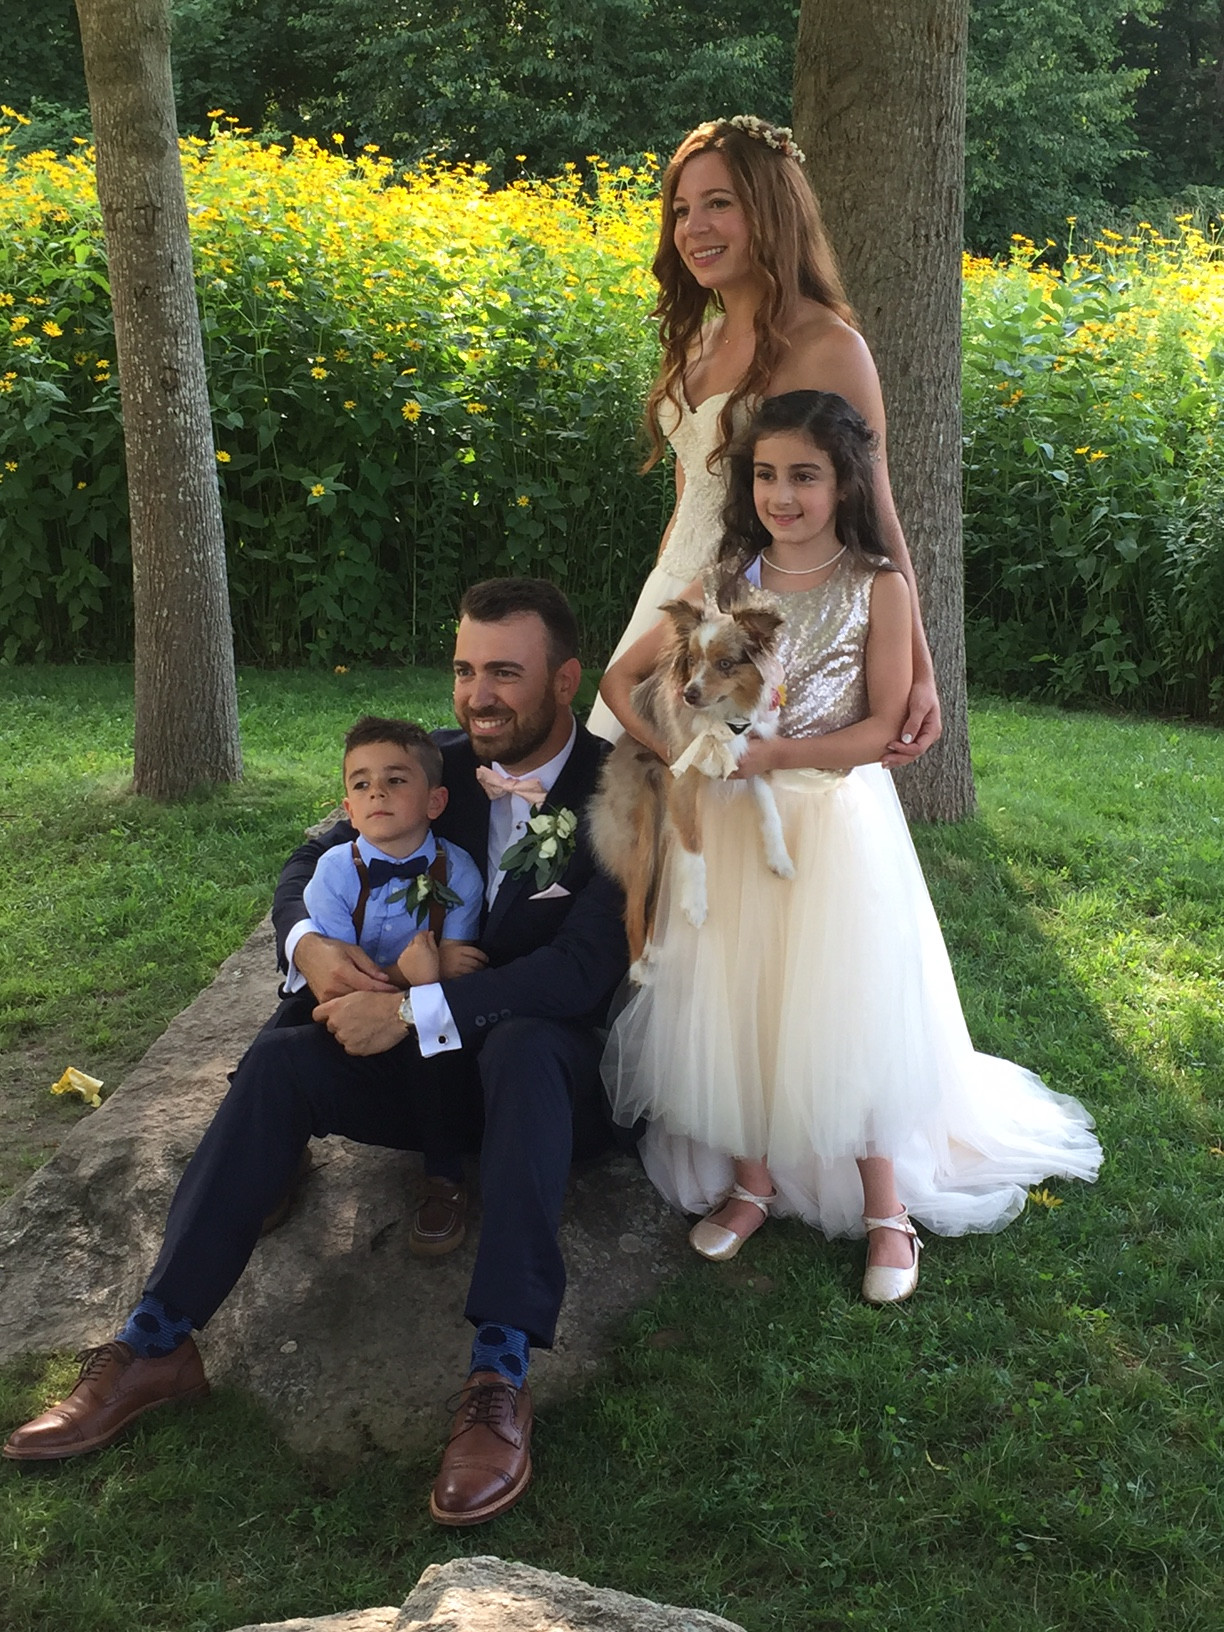 Newlyweds Andrea Swift Argyros and John Argyros last week with their flower girl, ring bearer and dog, Mila.